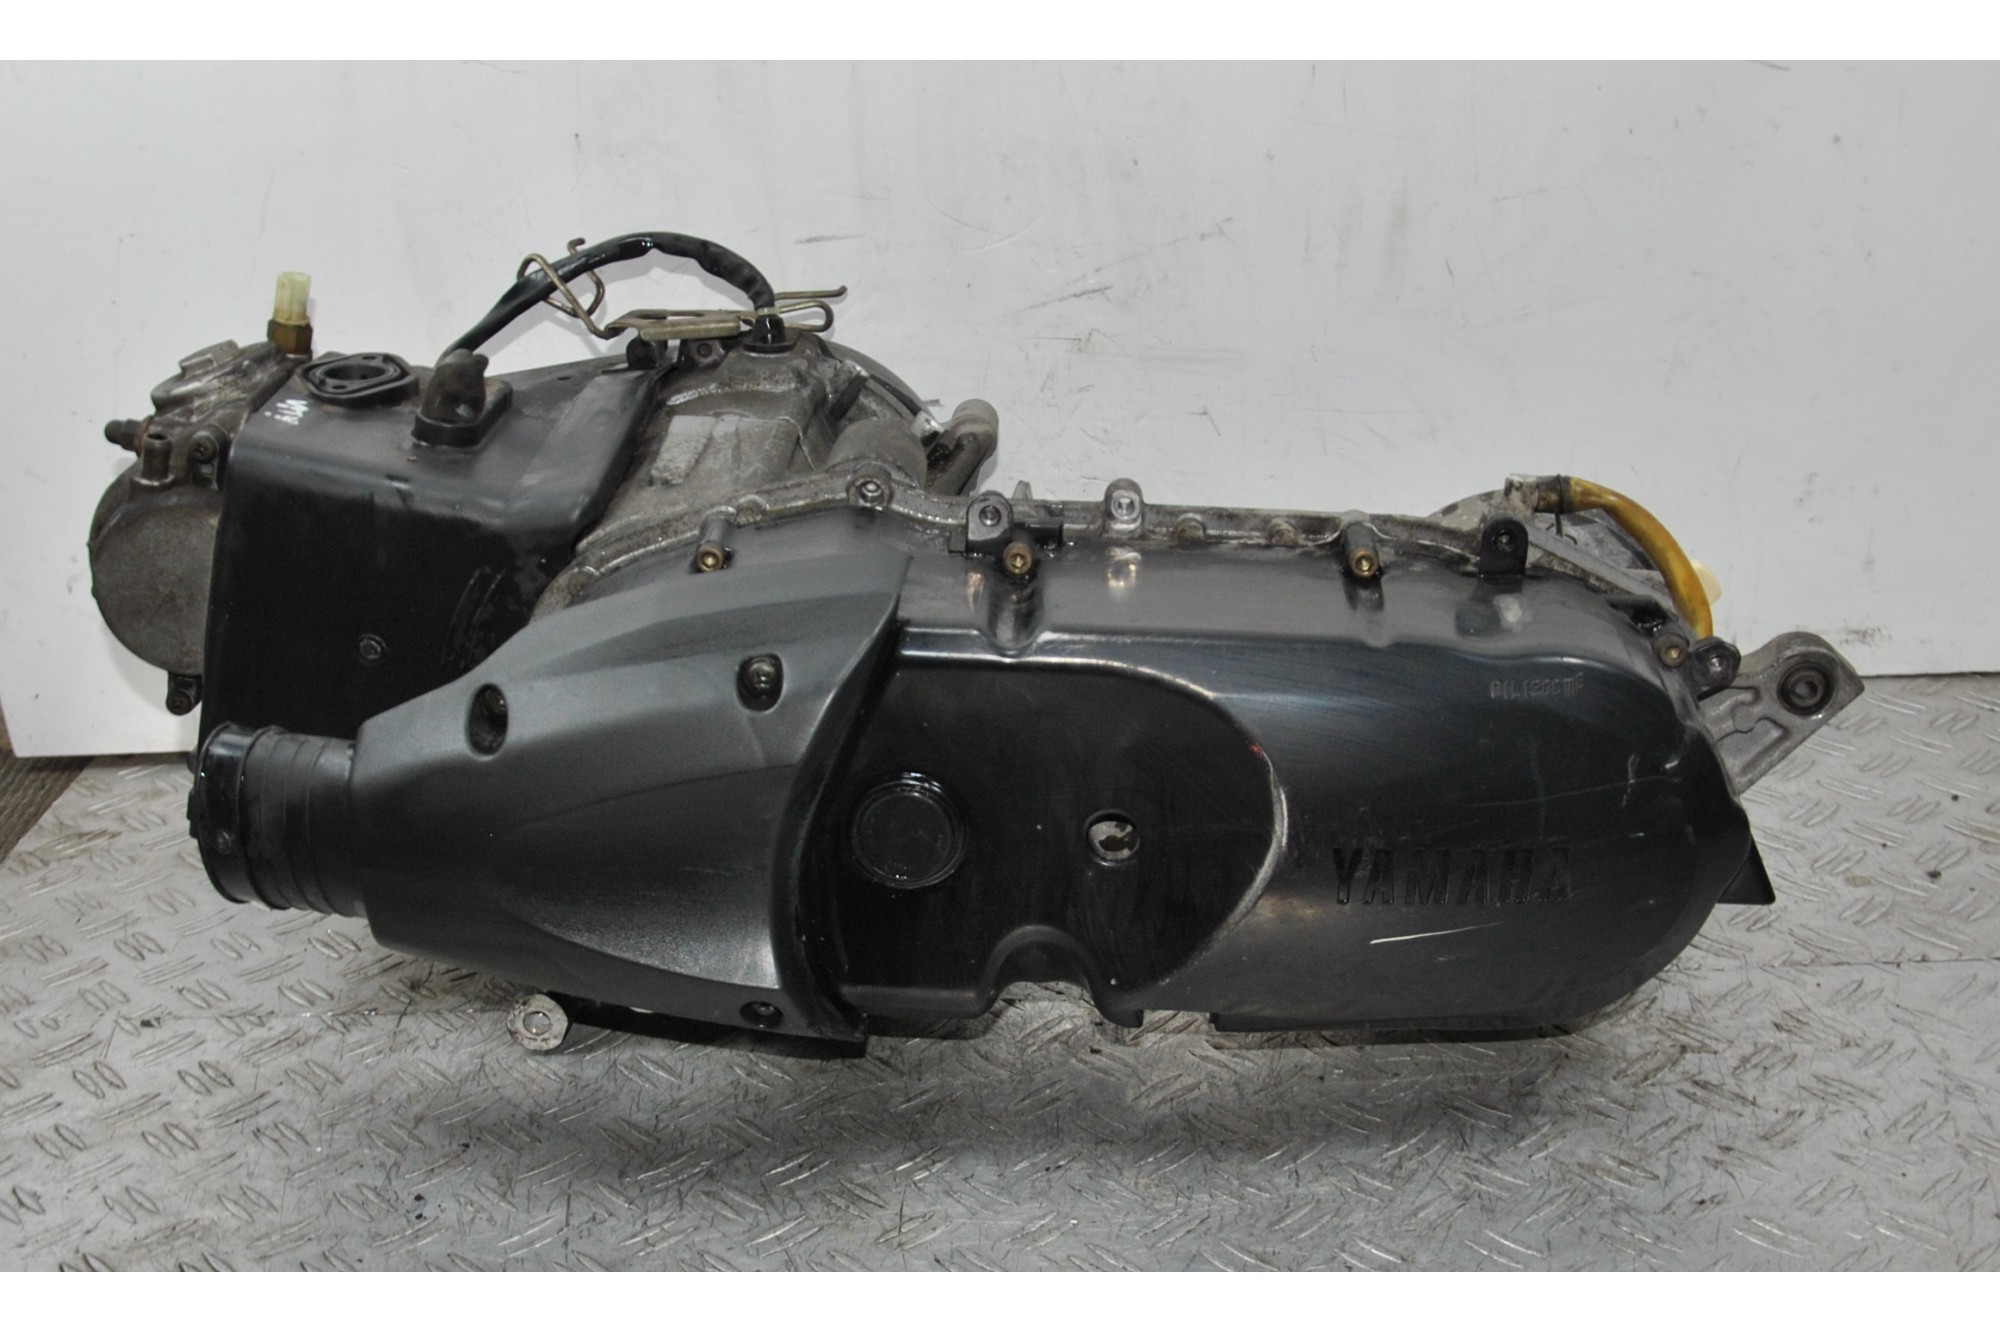 Blocco Motore Yamaha Vity 125 Dal 2007 al 2015 COD : E398E NUM:006282  1663325820136